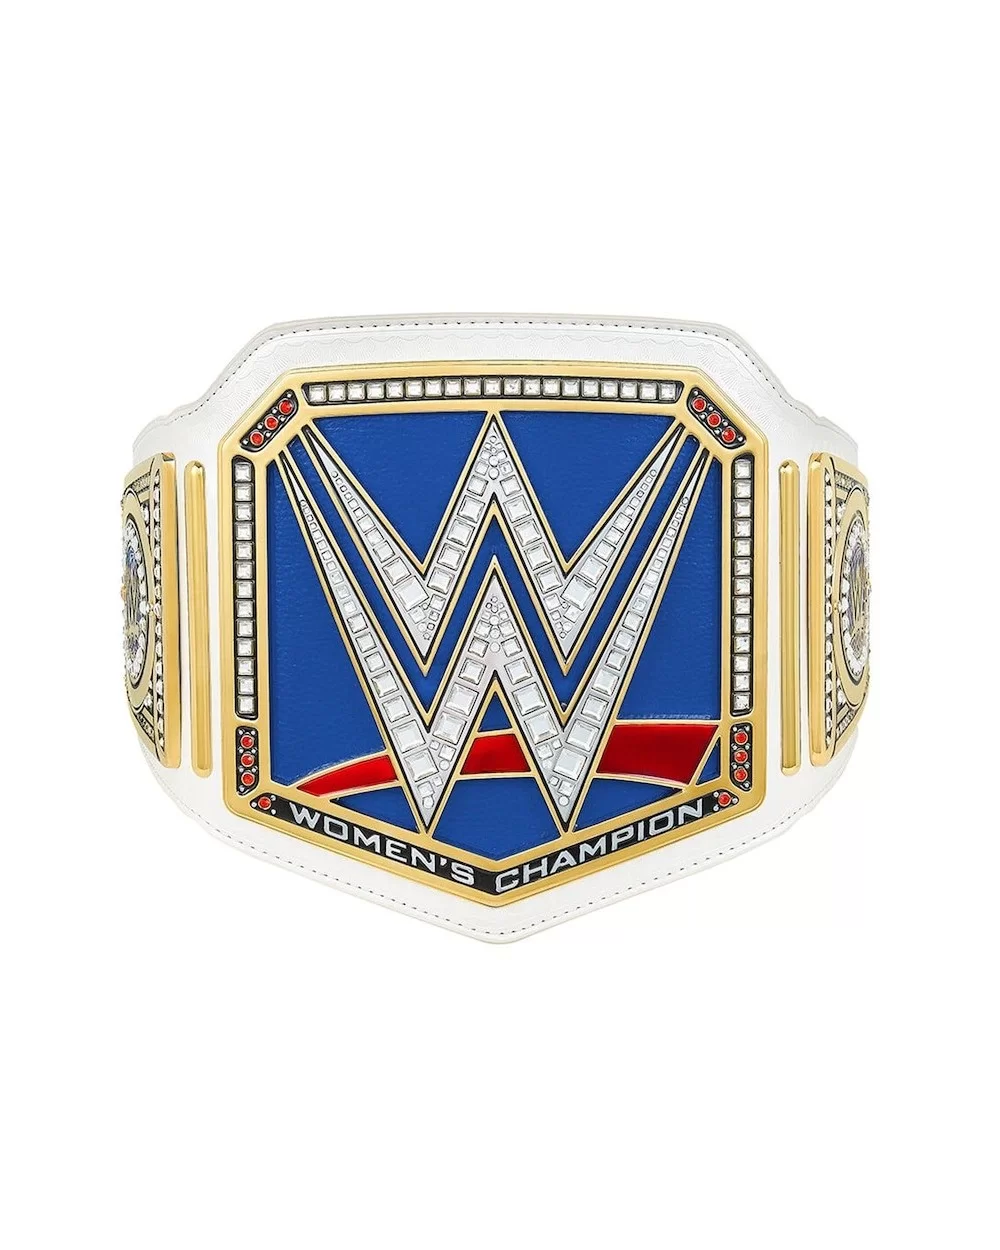 WWE SmackDown Women's Championship Commemorative Title Belt $84.00 Collectibles